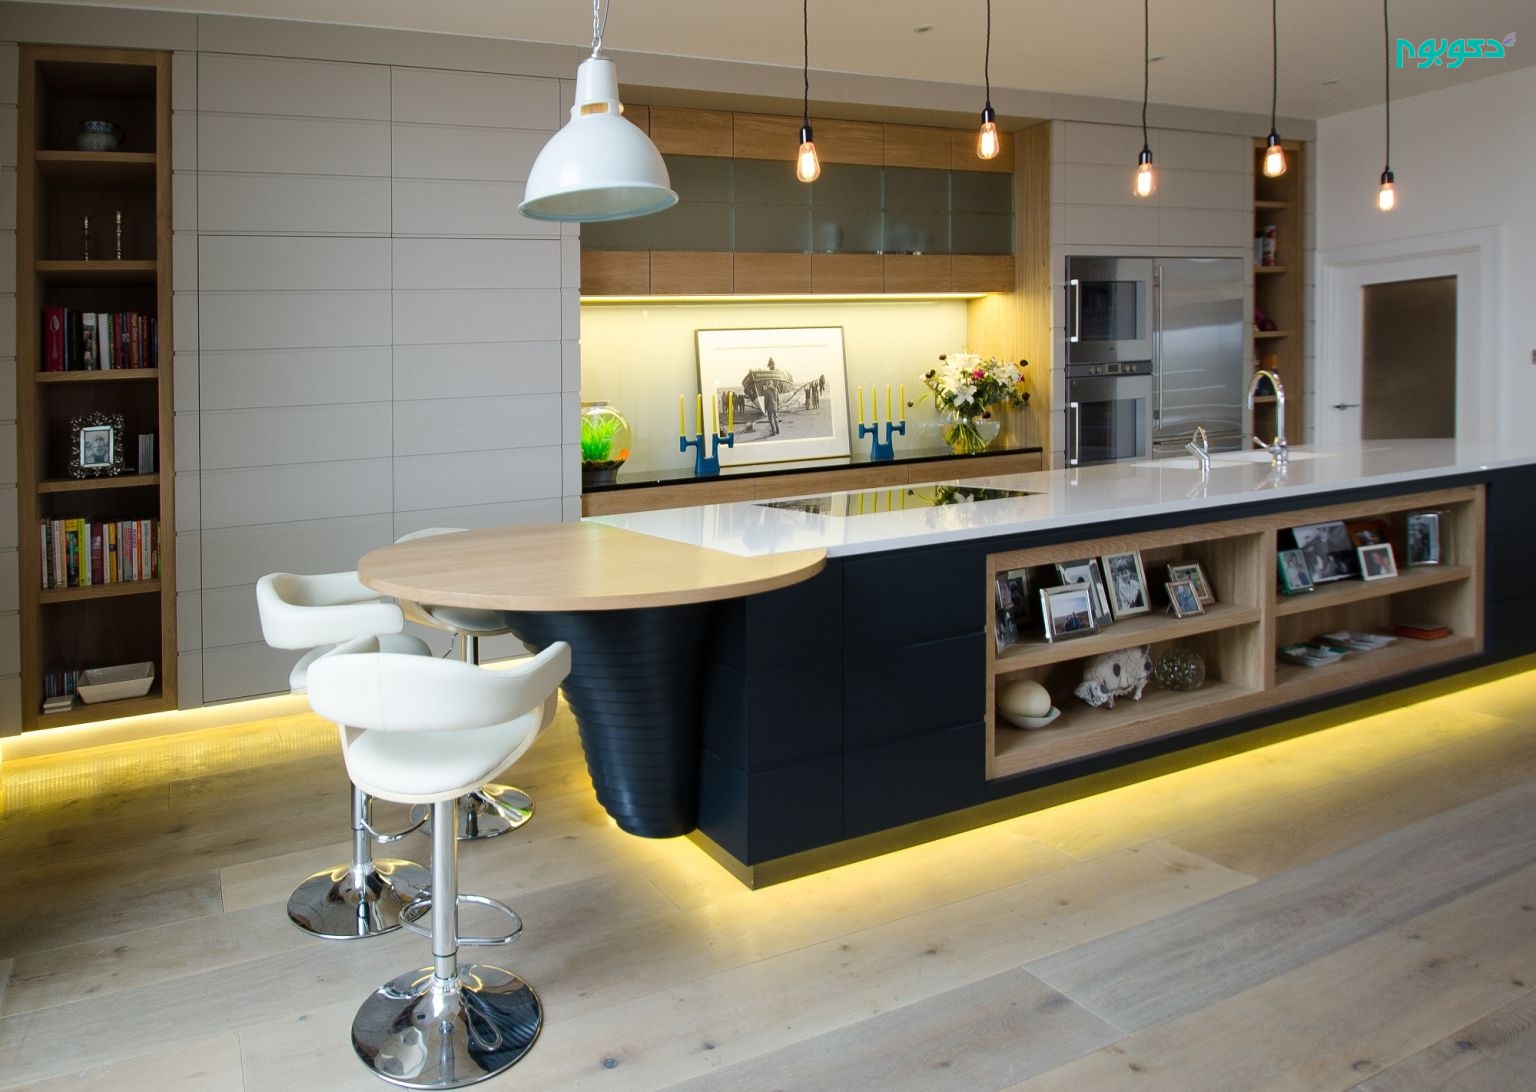 26-get-the-glow-kitchen-island-idea-homebnc-768x546@2x.jpg